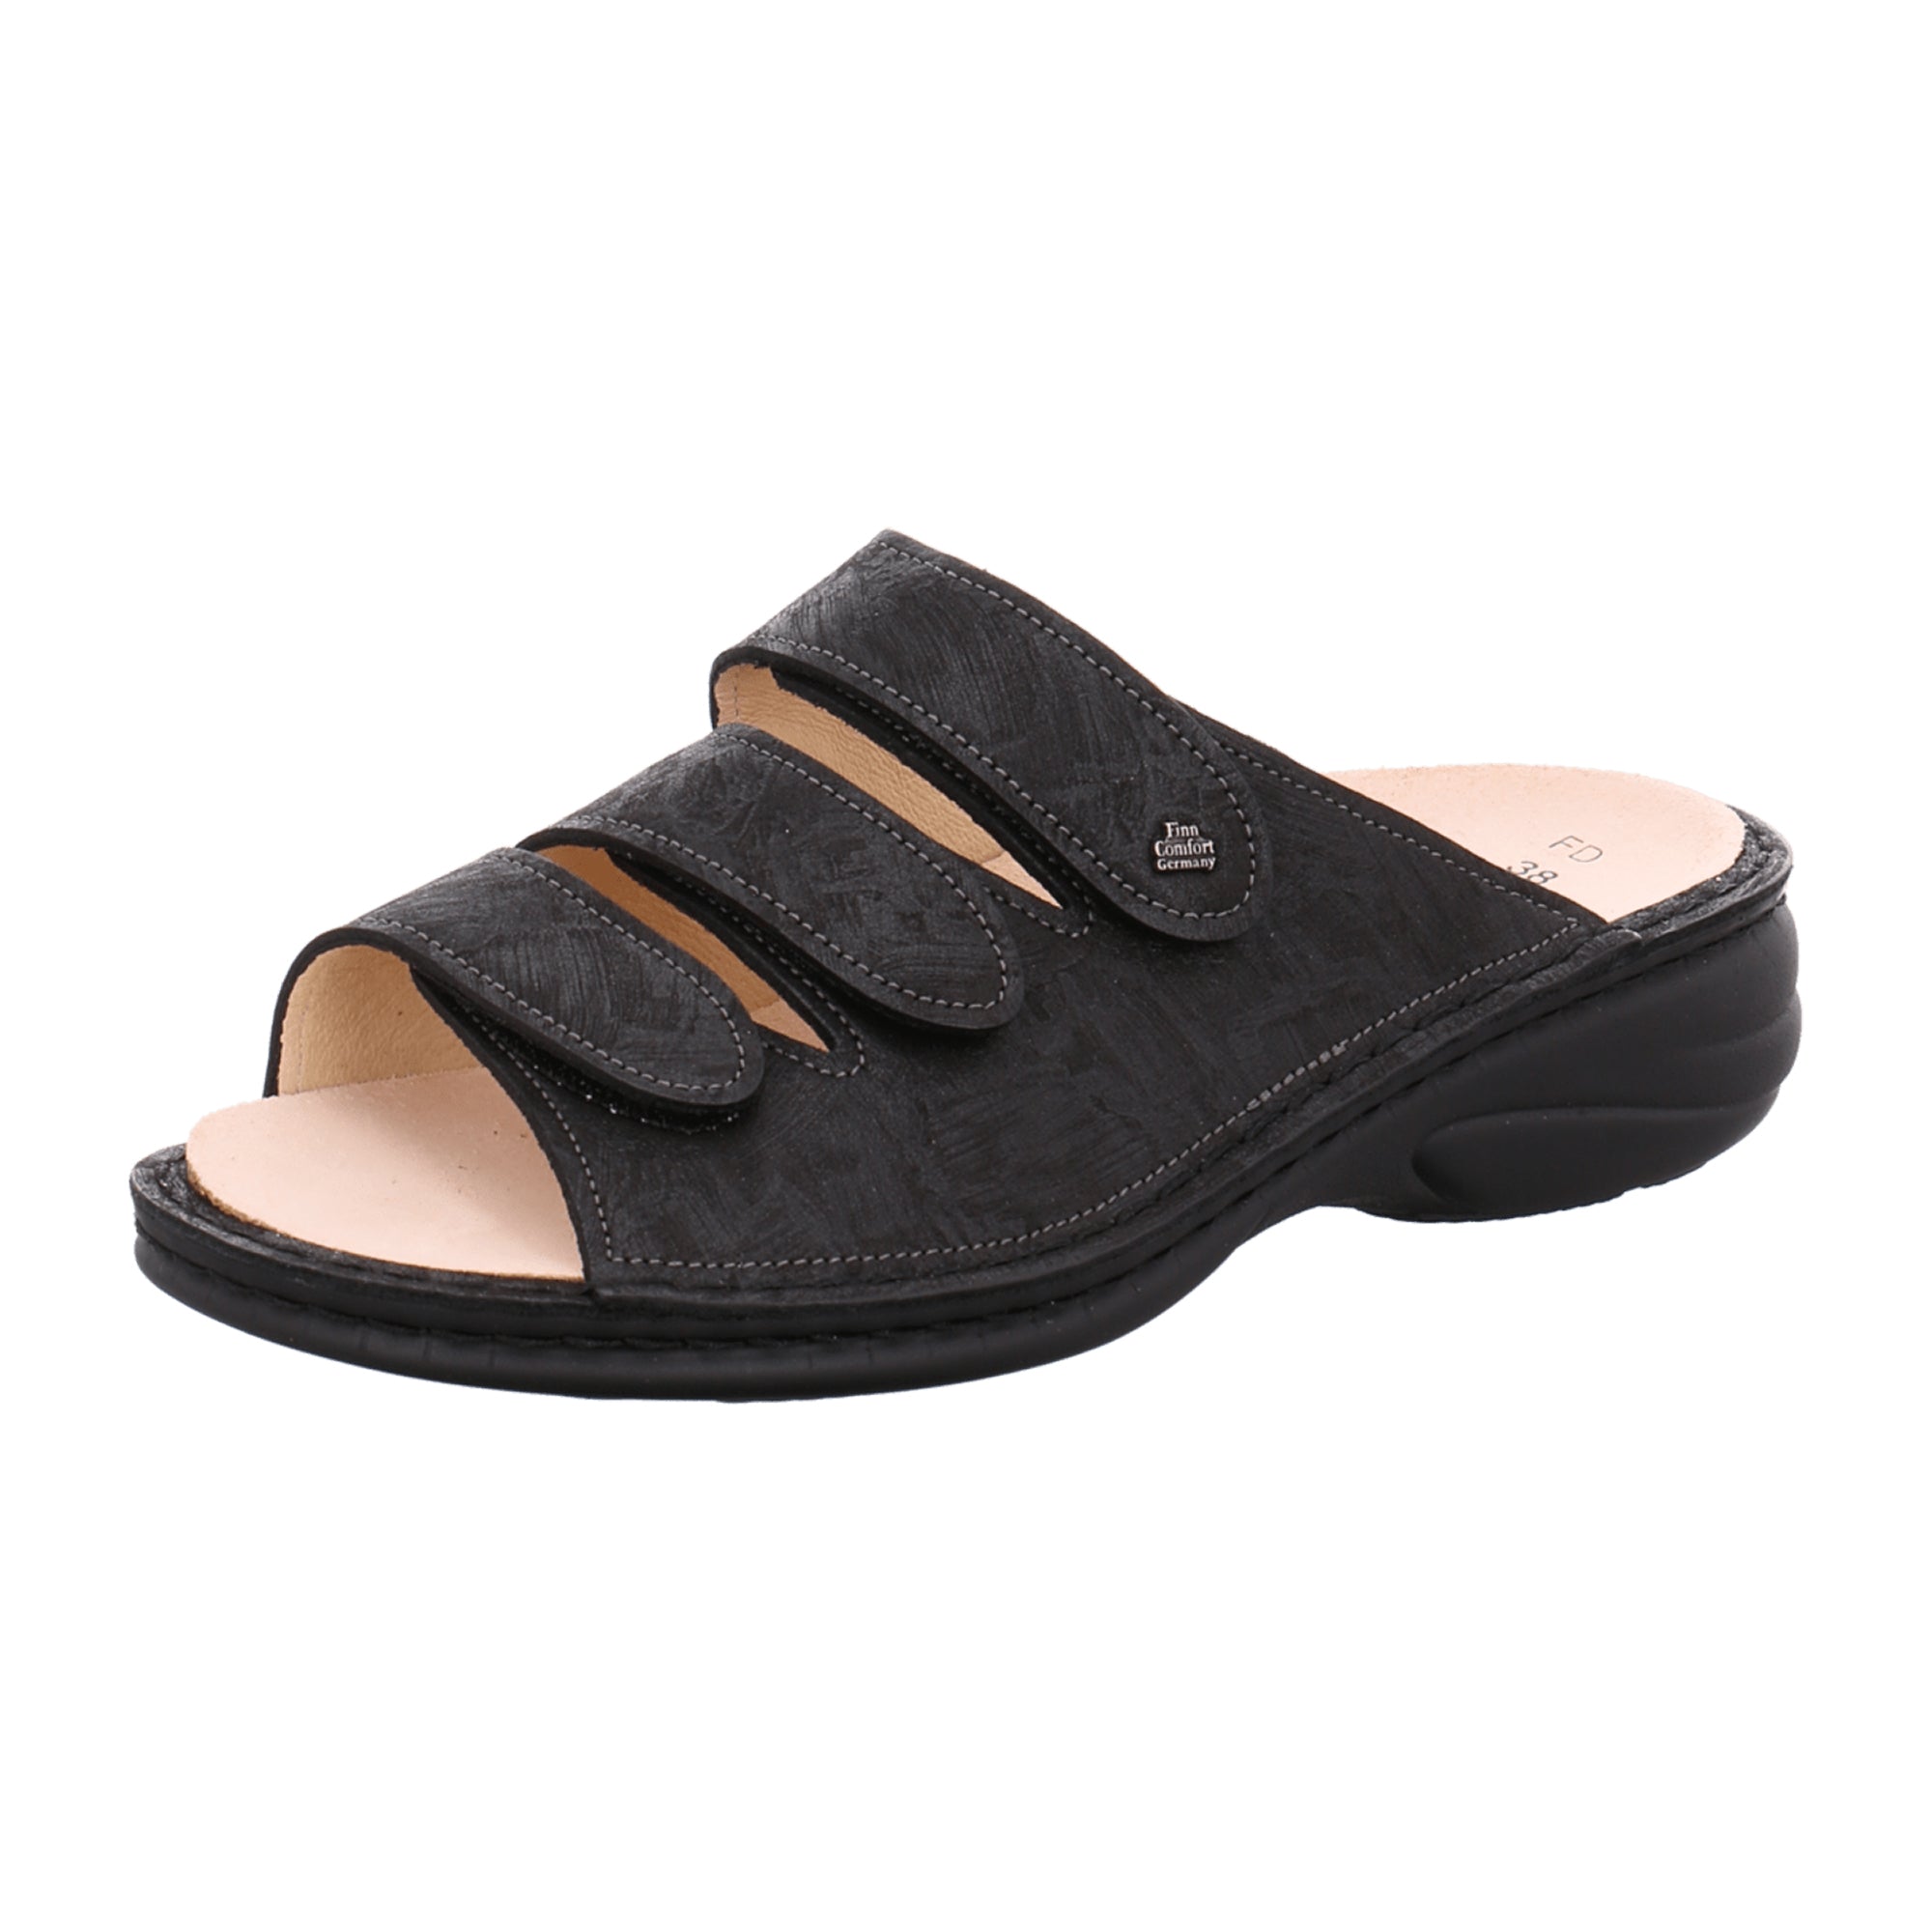 Finn Comfort Hellas Women's Comfort Shoes - Elegant Black Leather